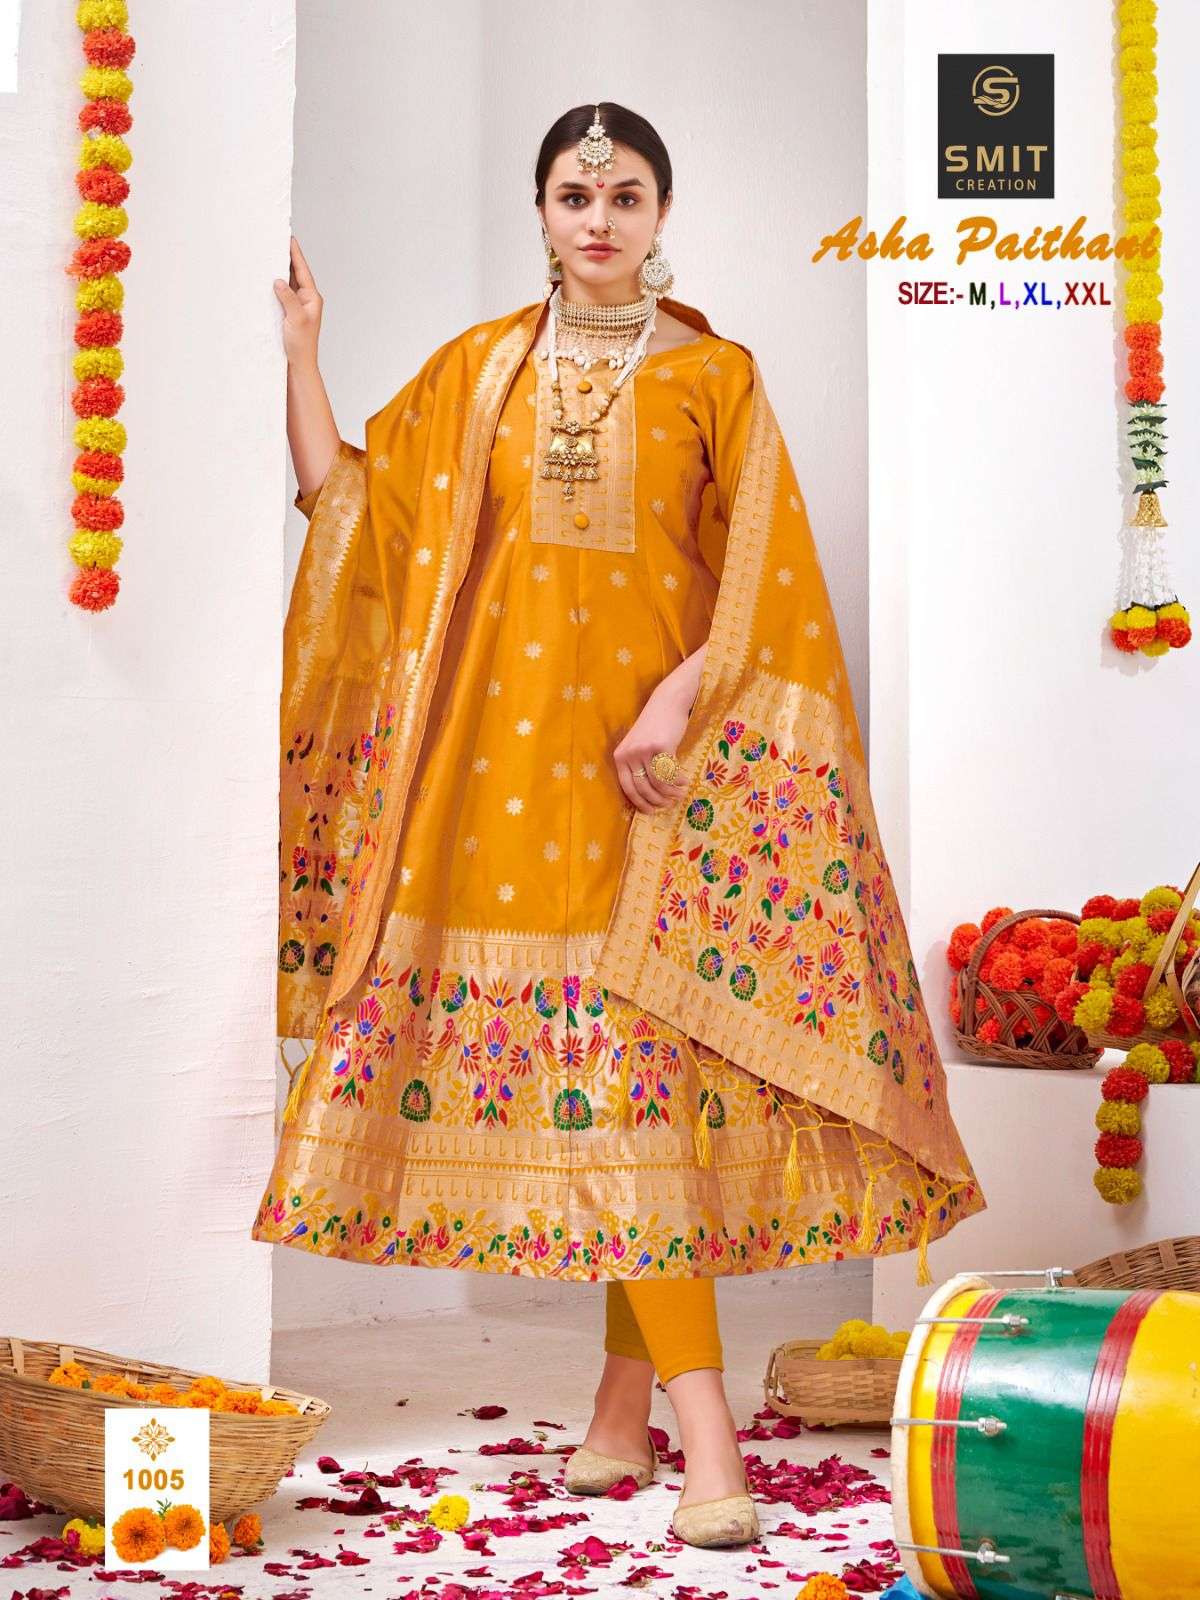 smit creation asha paithani 1001-1006 series stylish designer paithani gown with dupatta latest catalogue surat 